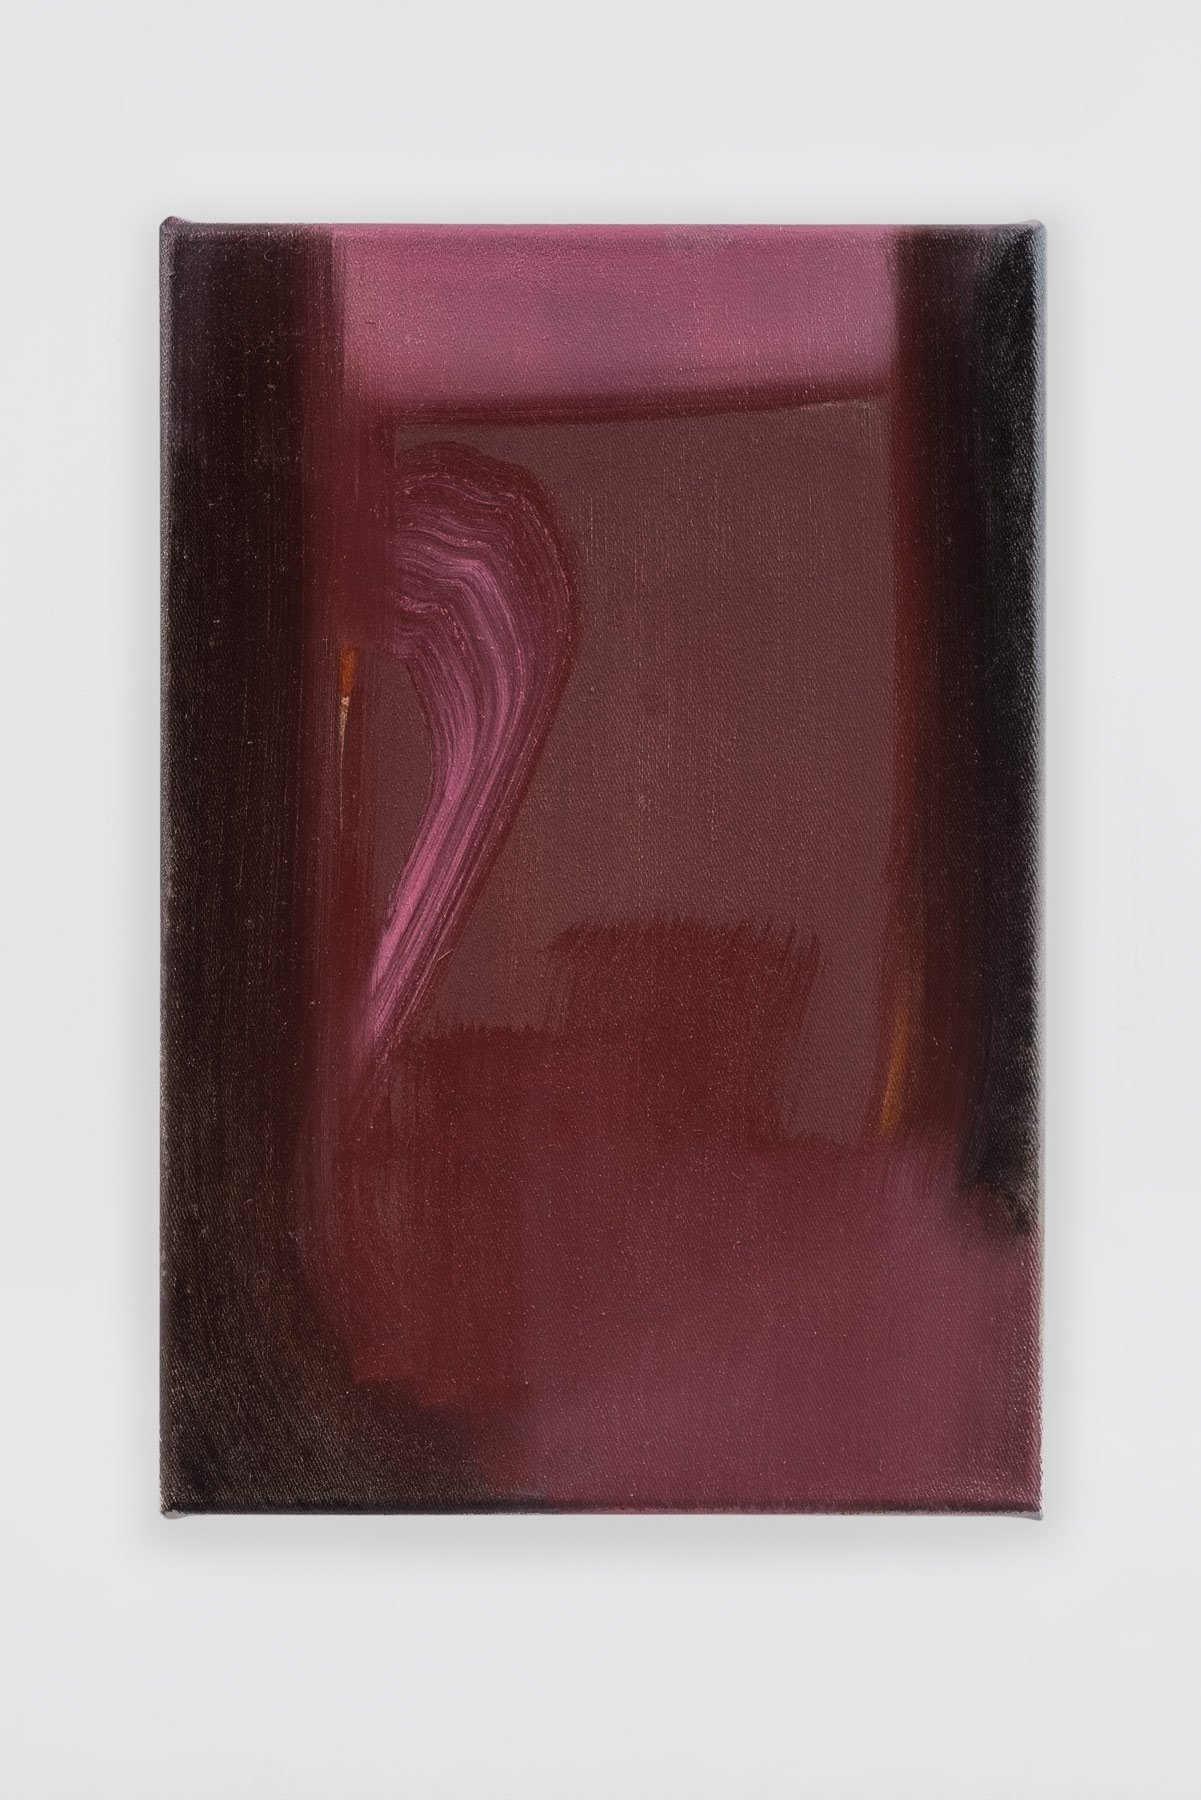 B03 - 0121, 2021, oil on canvas, 35 x 24 cm